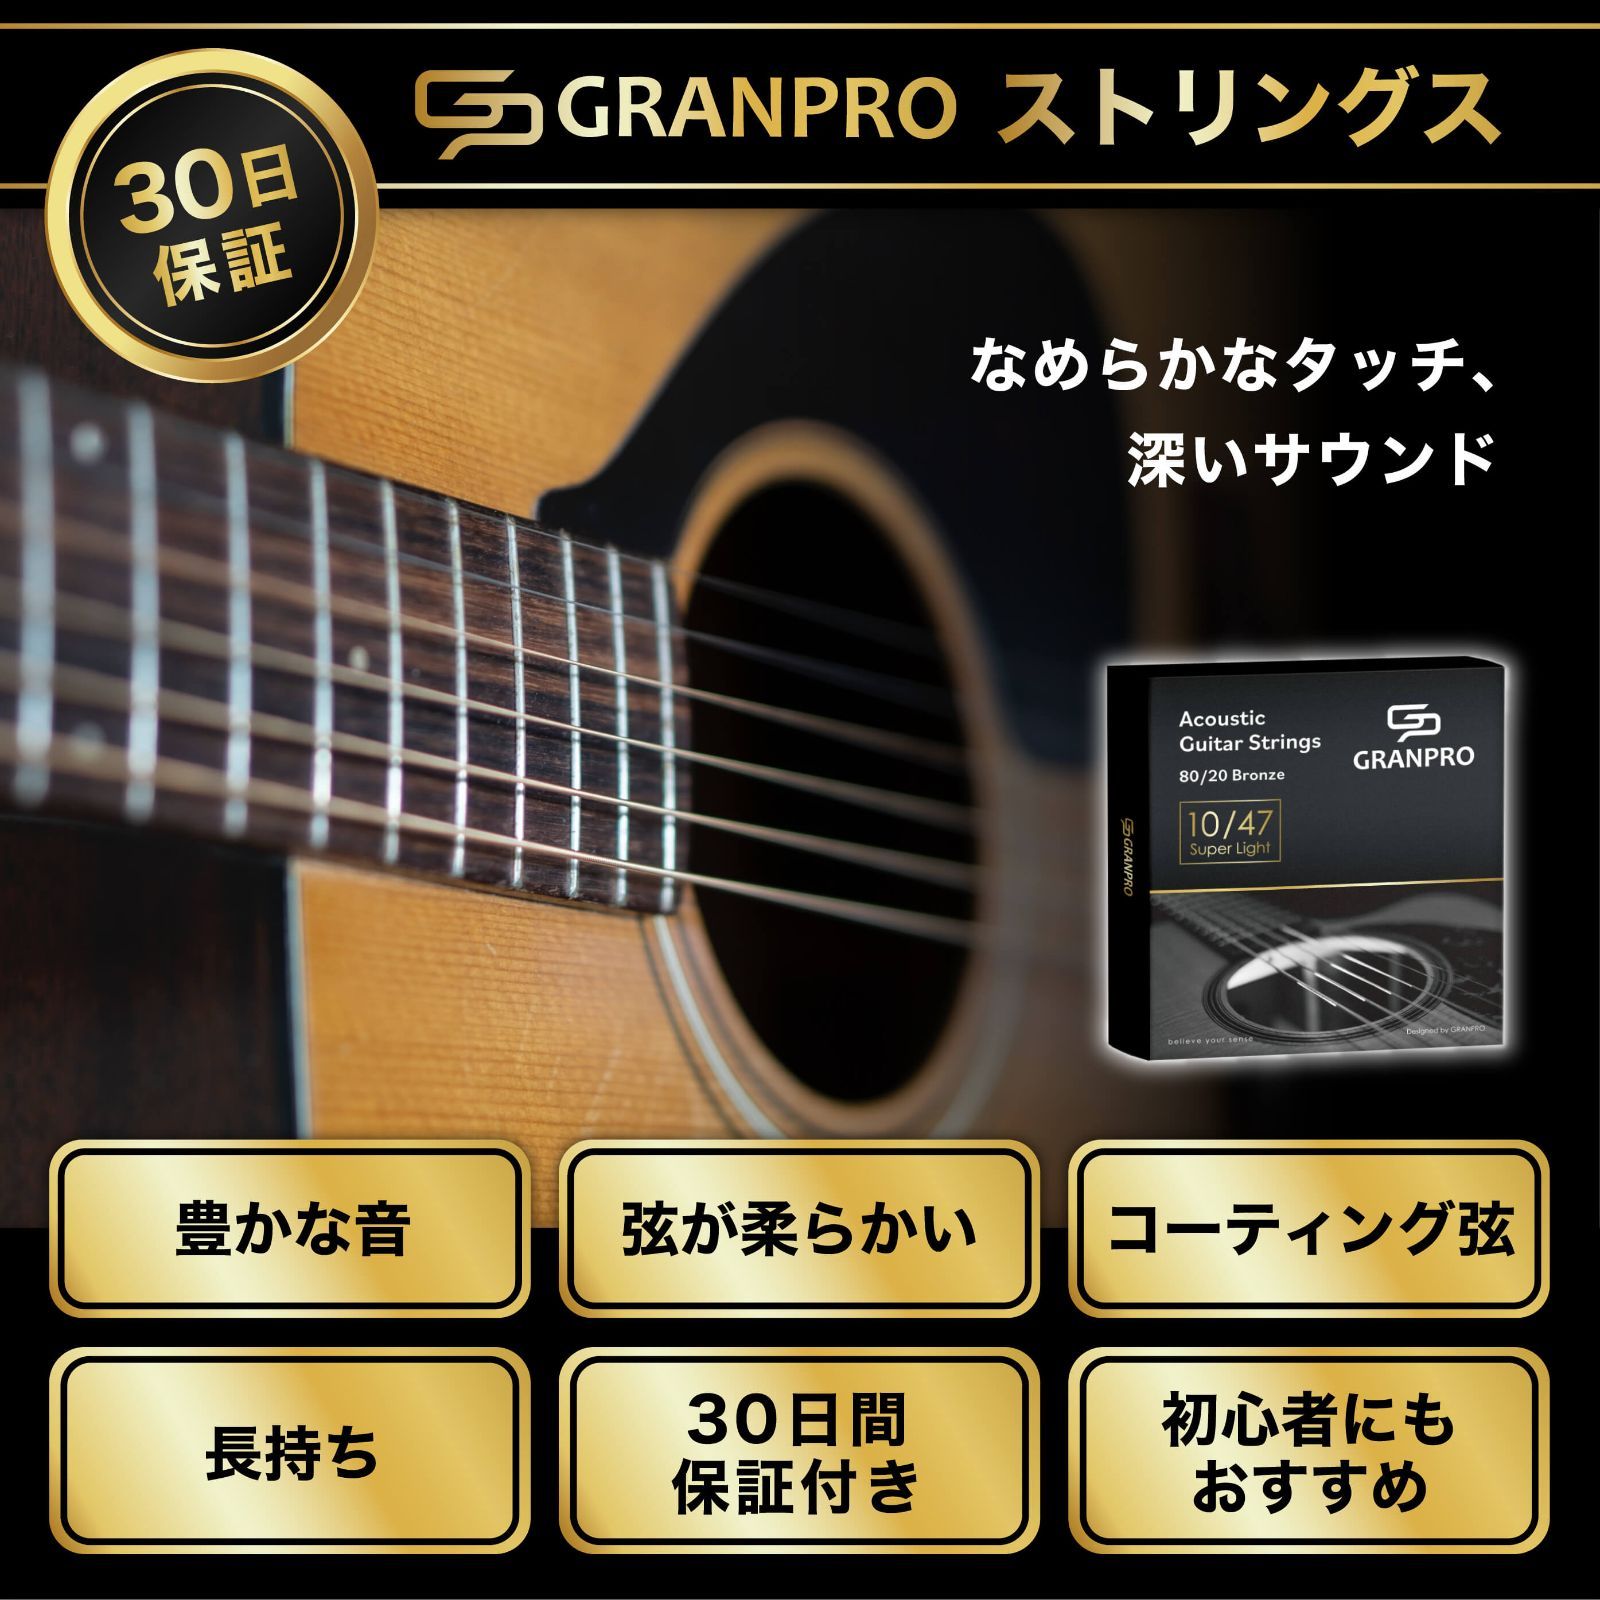 D'Addario ダダリオ アコースティックギター弦 80 20ブロンズ Medium .013-.056 EJ12 x 10セット 国内